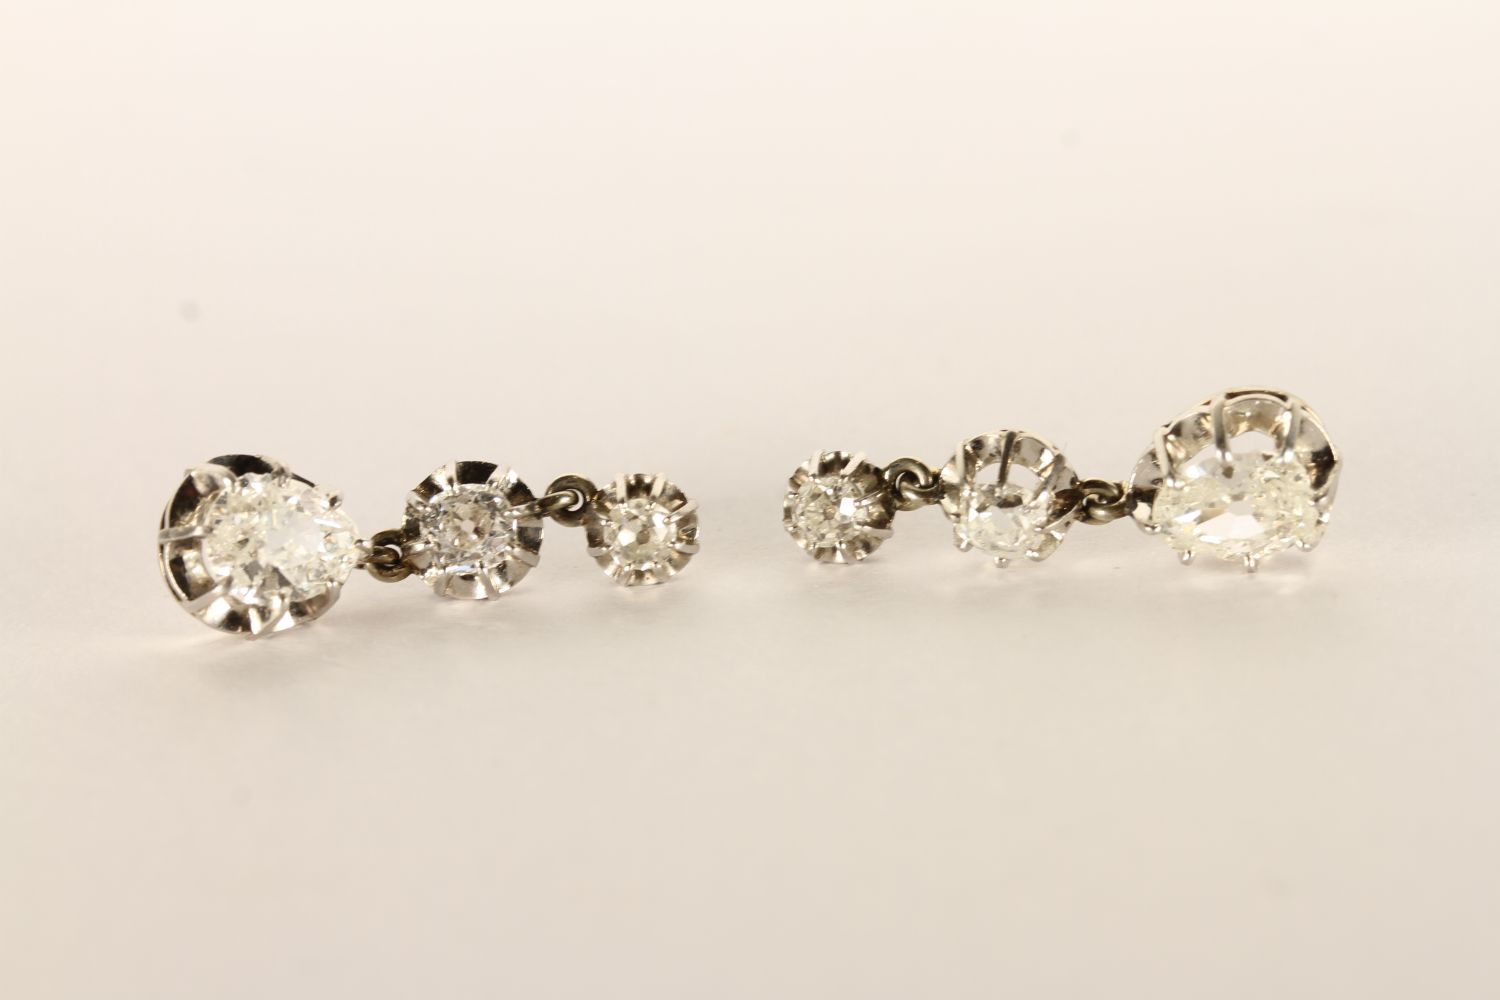 2.10ct Pear of Old Cut Diamond Drop Earrings, feature old cut pear drops, estimated (7.87x6.08x2.